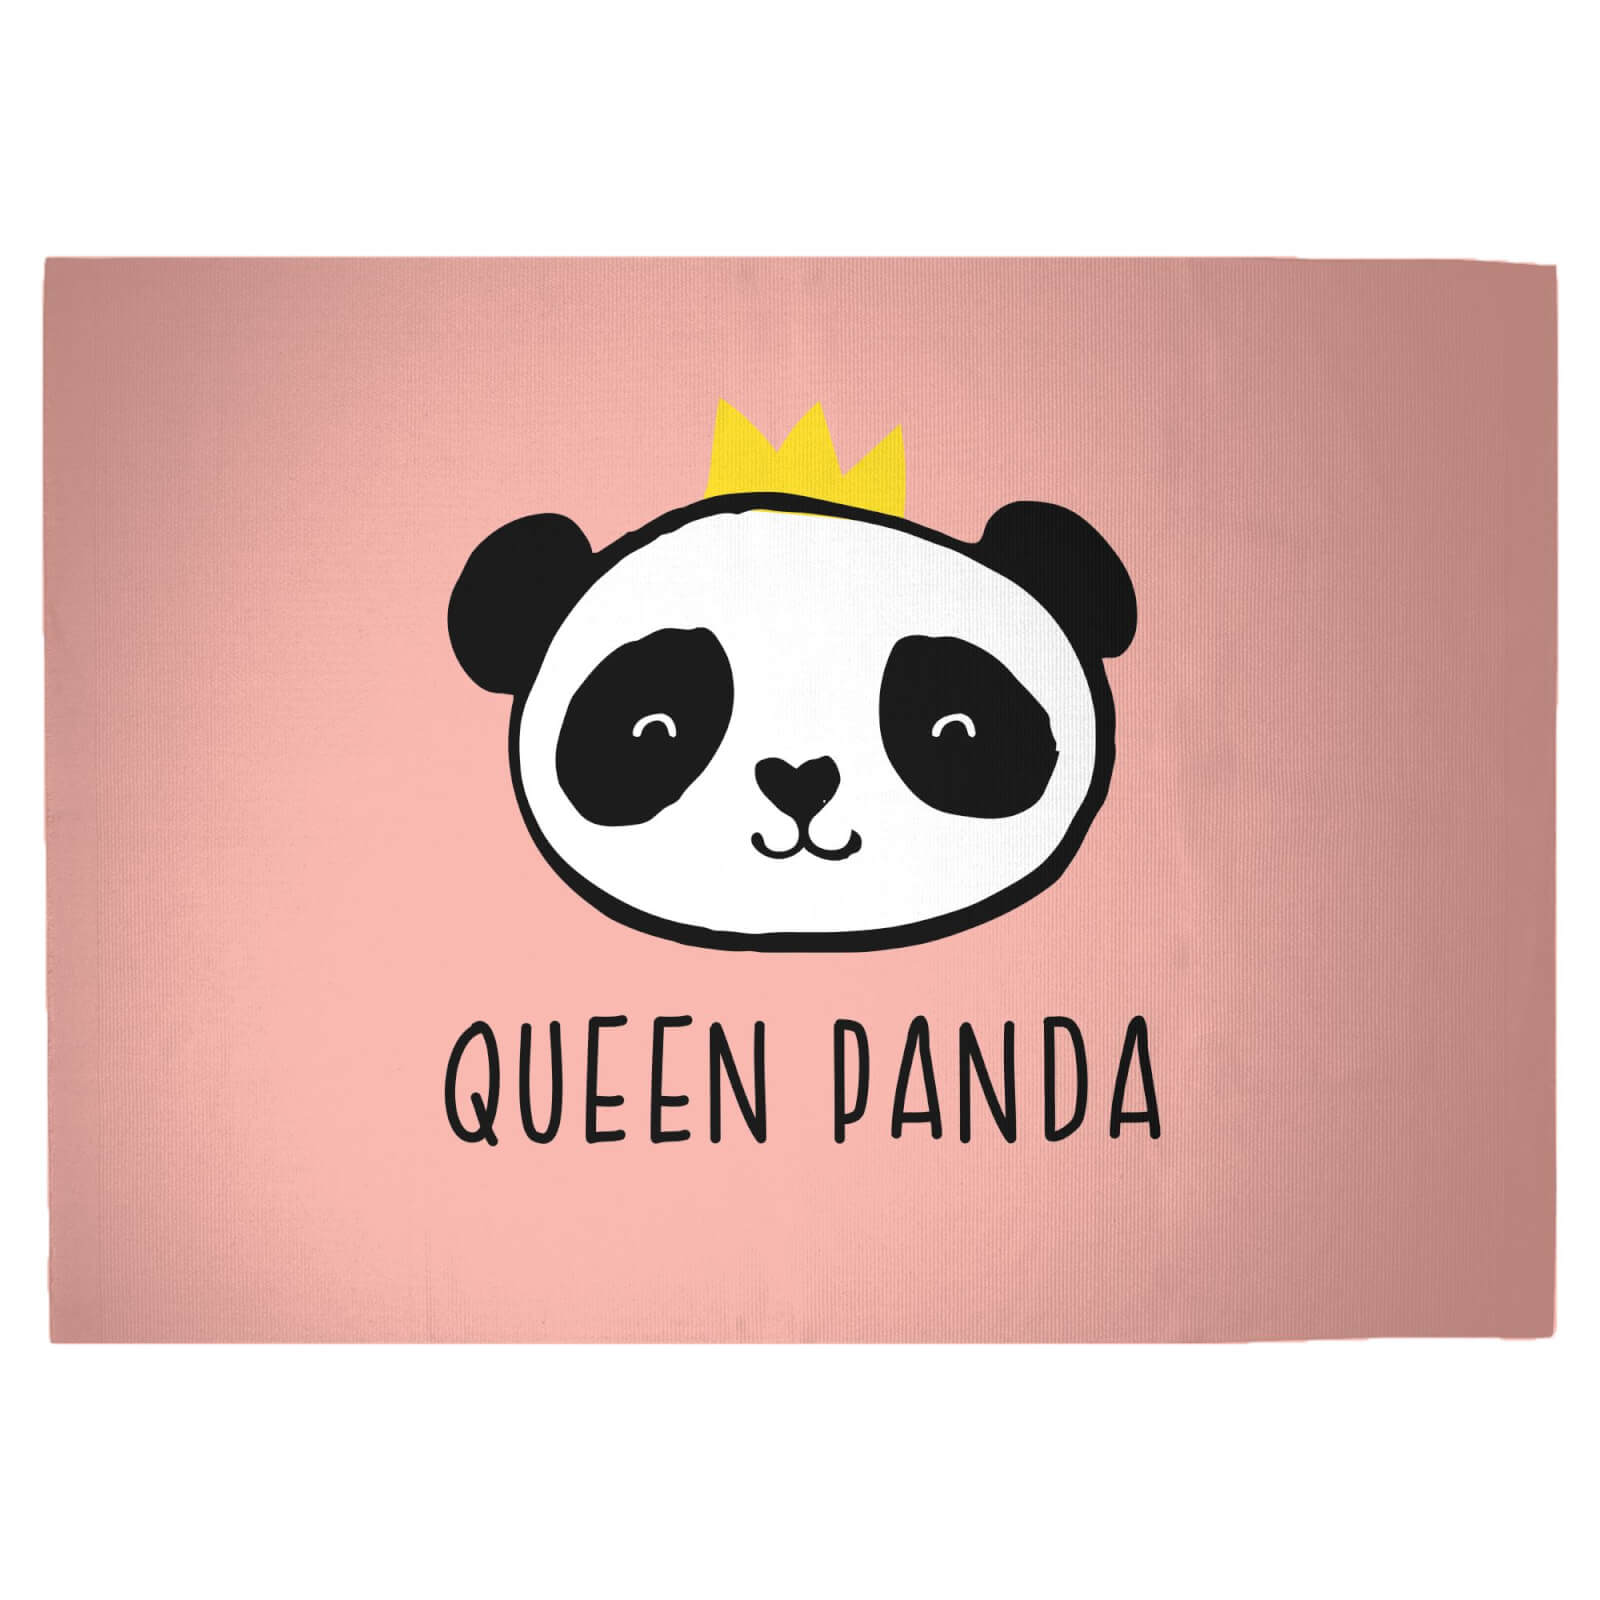 Queen Panda Woven Rug - Large